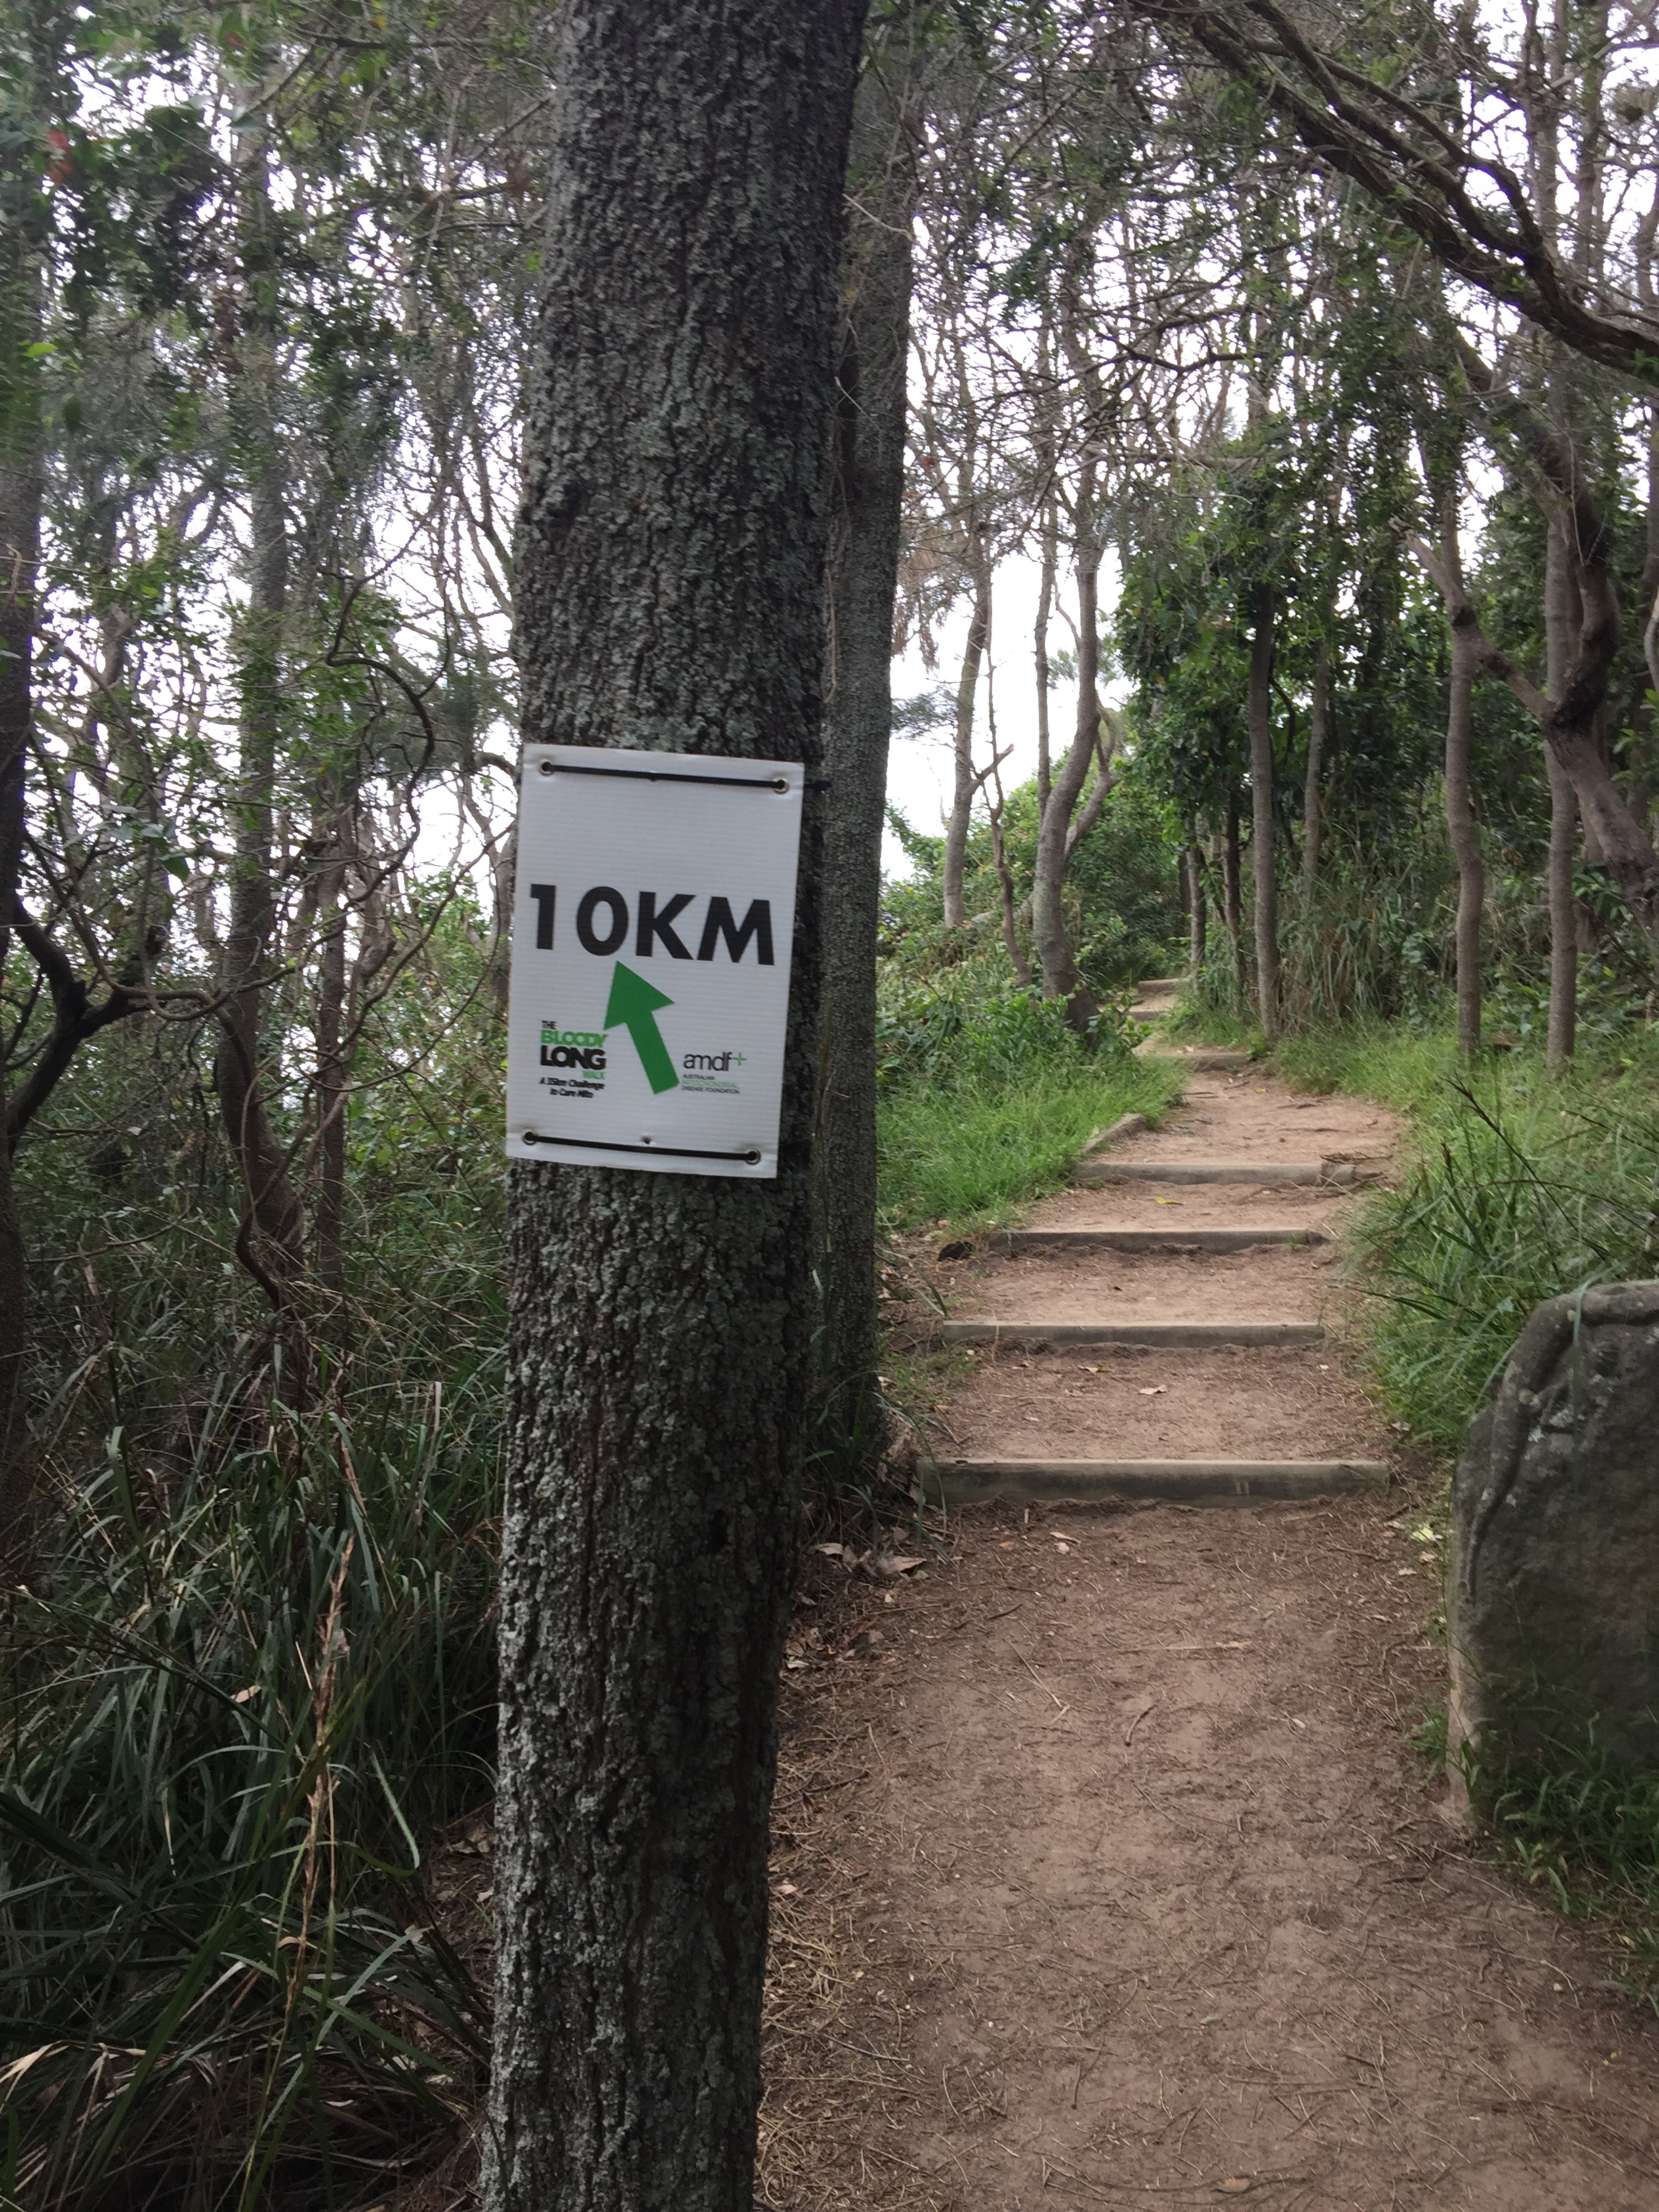 10km mark